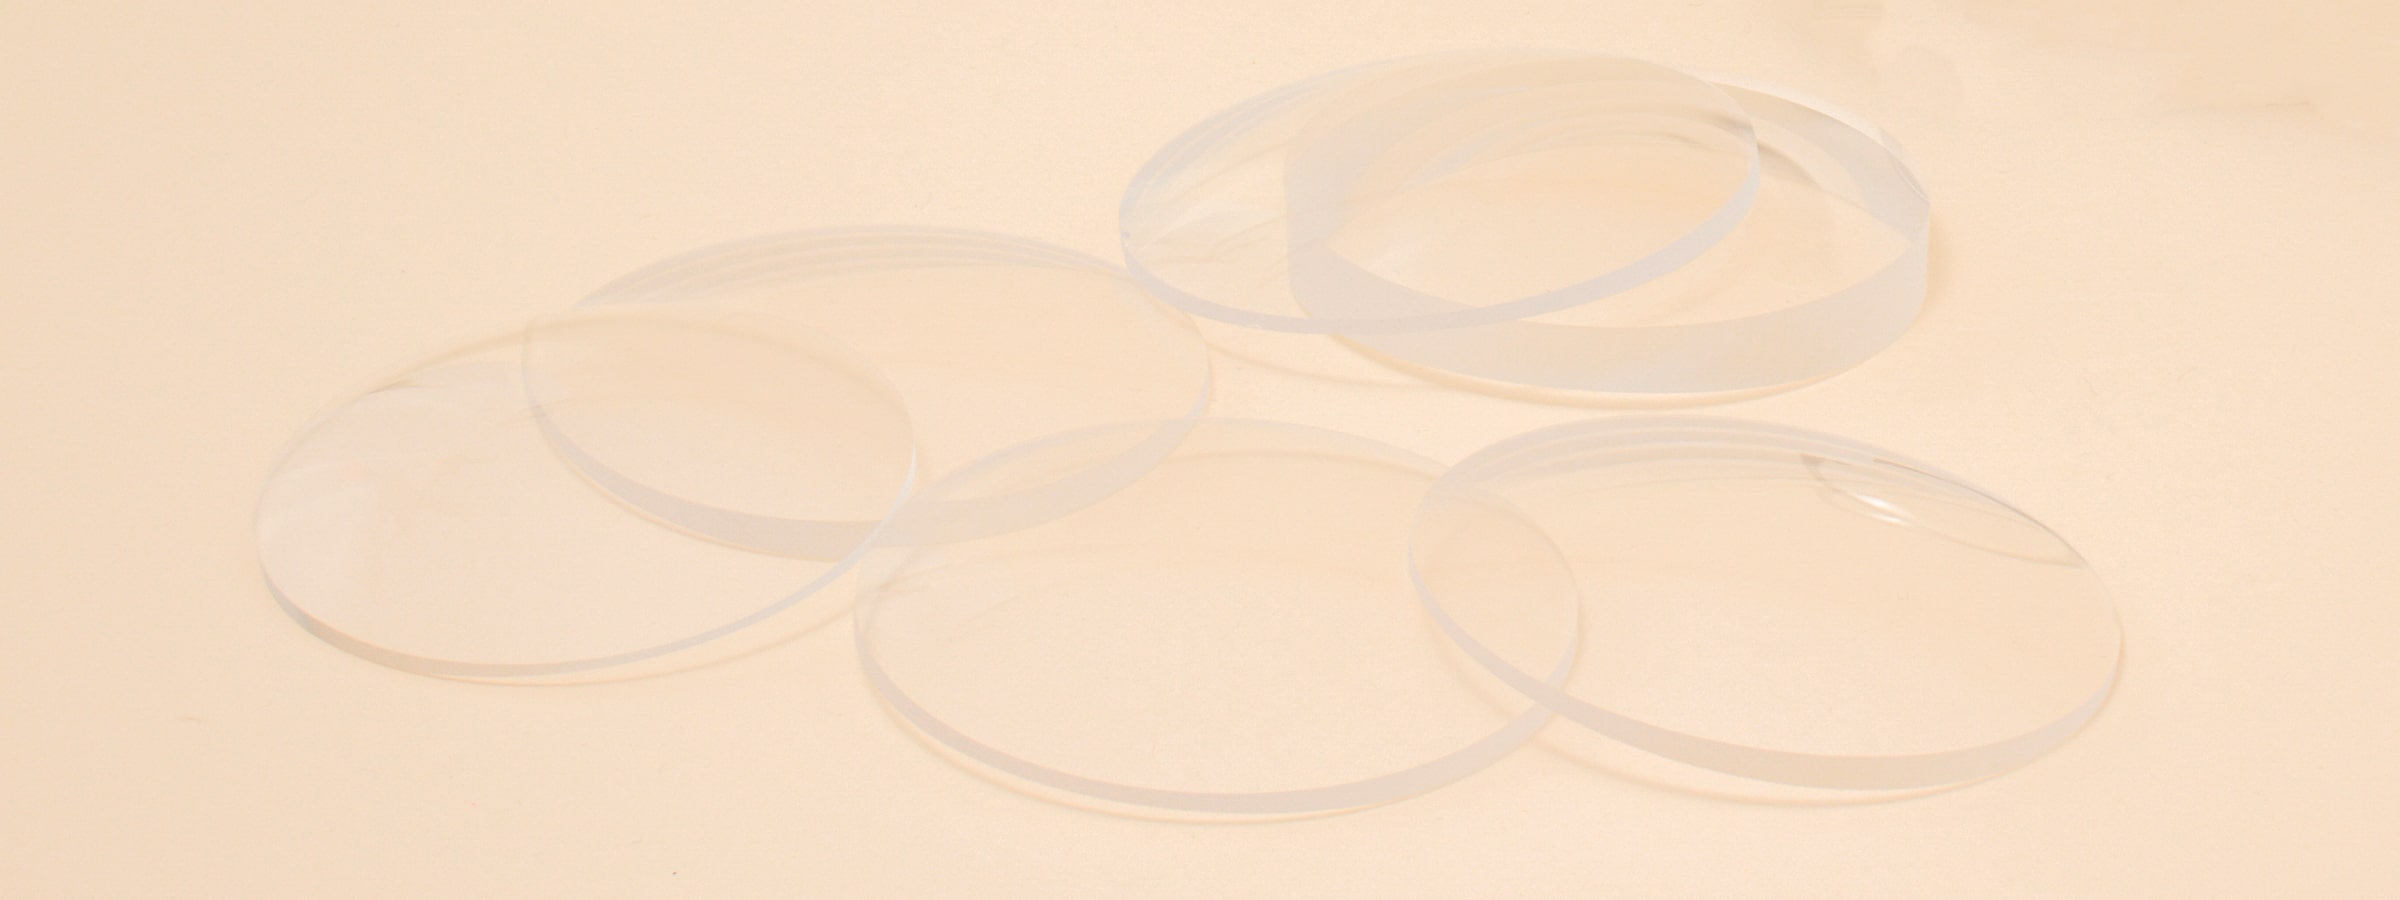 Glasses lenses lying on a table